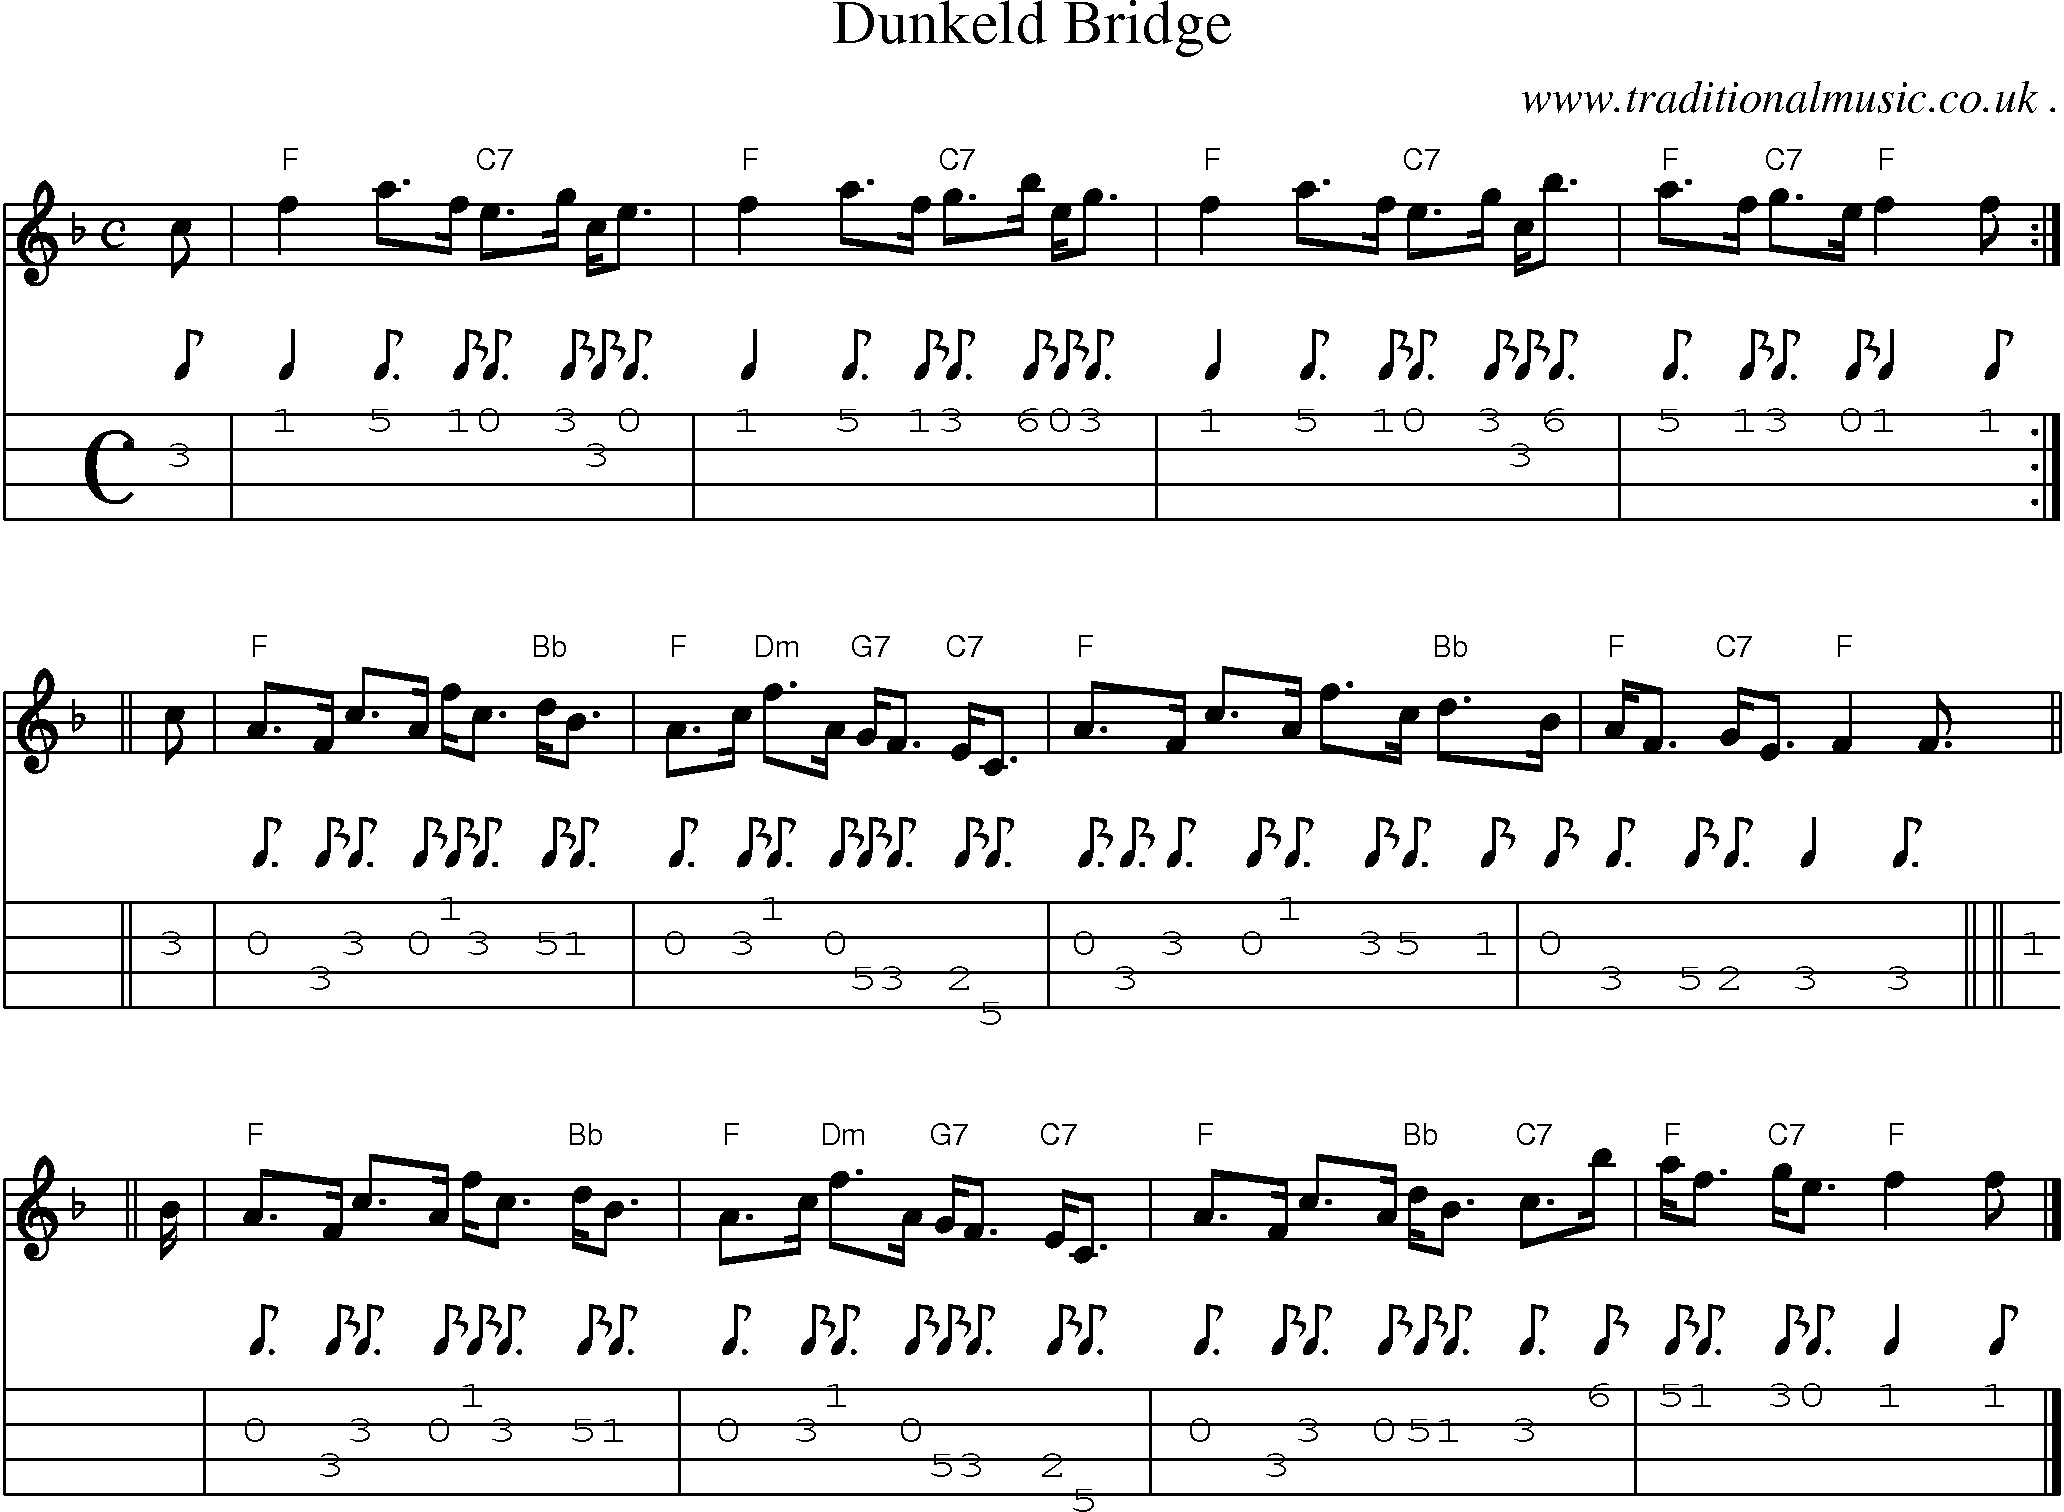 Sheet-music  score, Chords and Mandolin Tabs for Dunkeld Bridge